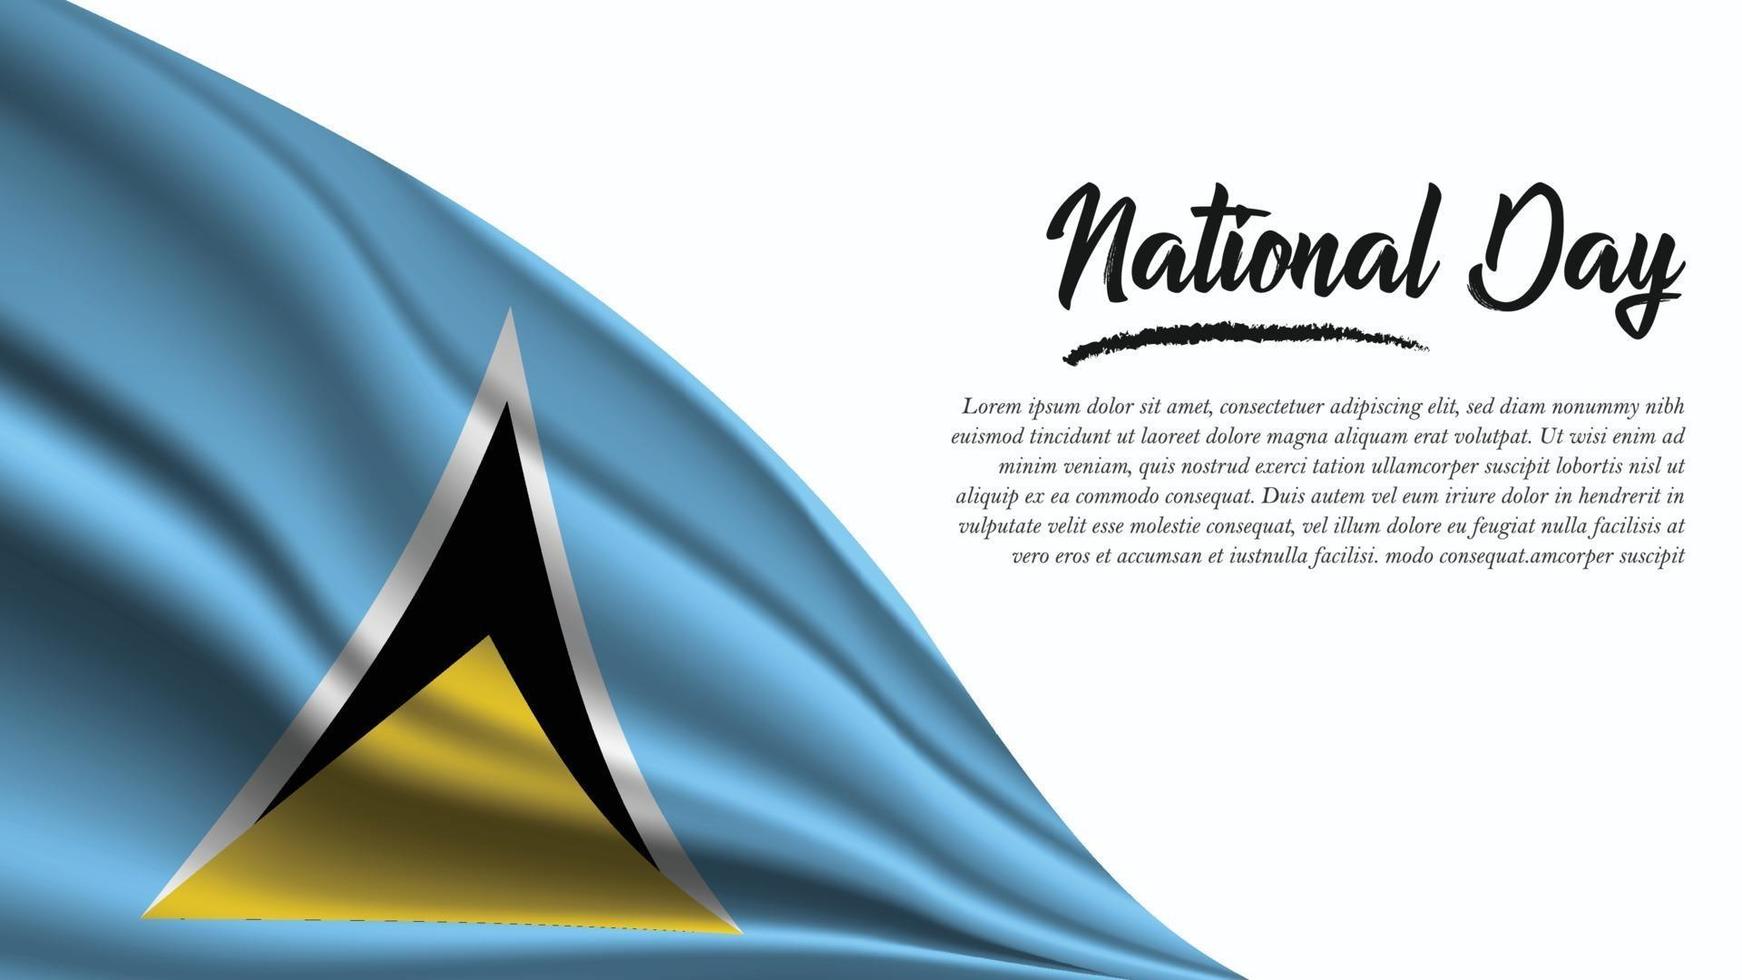 banner do dia nacional com fundo da bandeira de santa lucia vetor